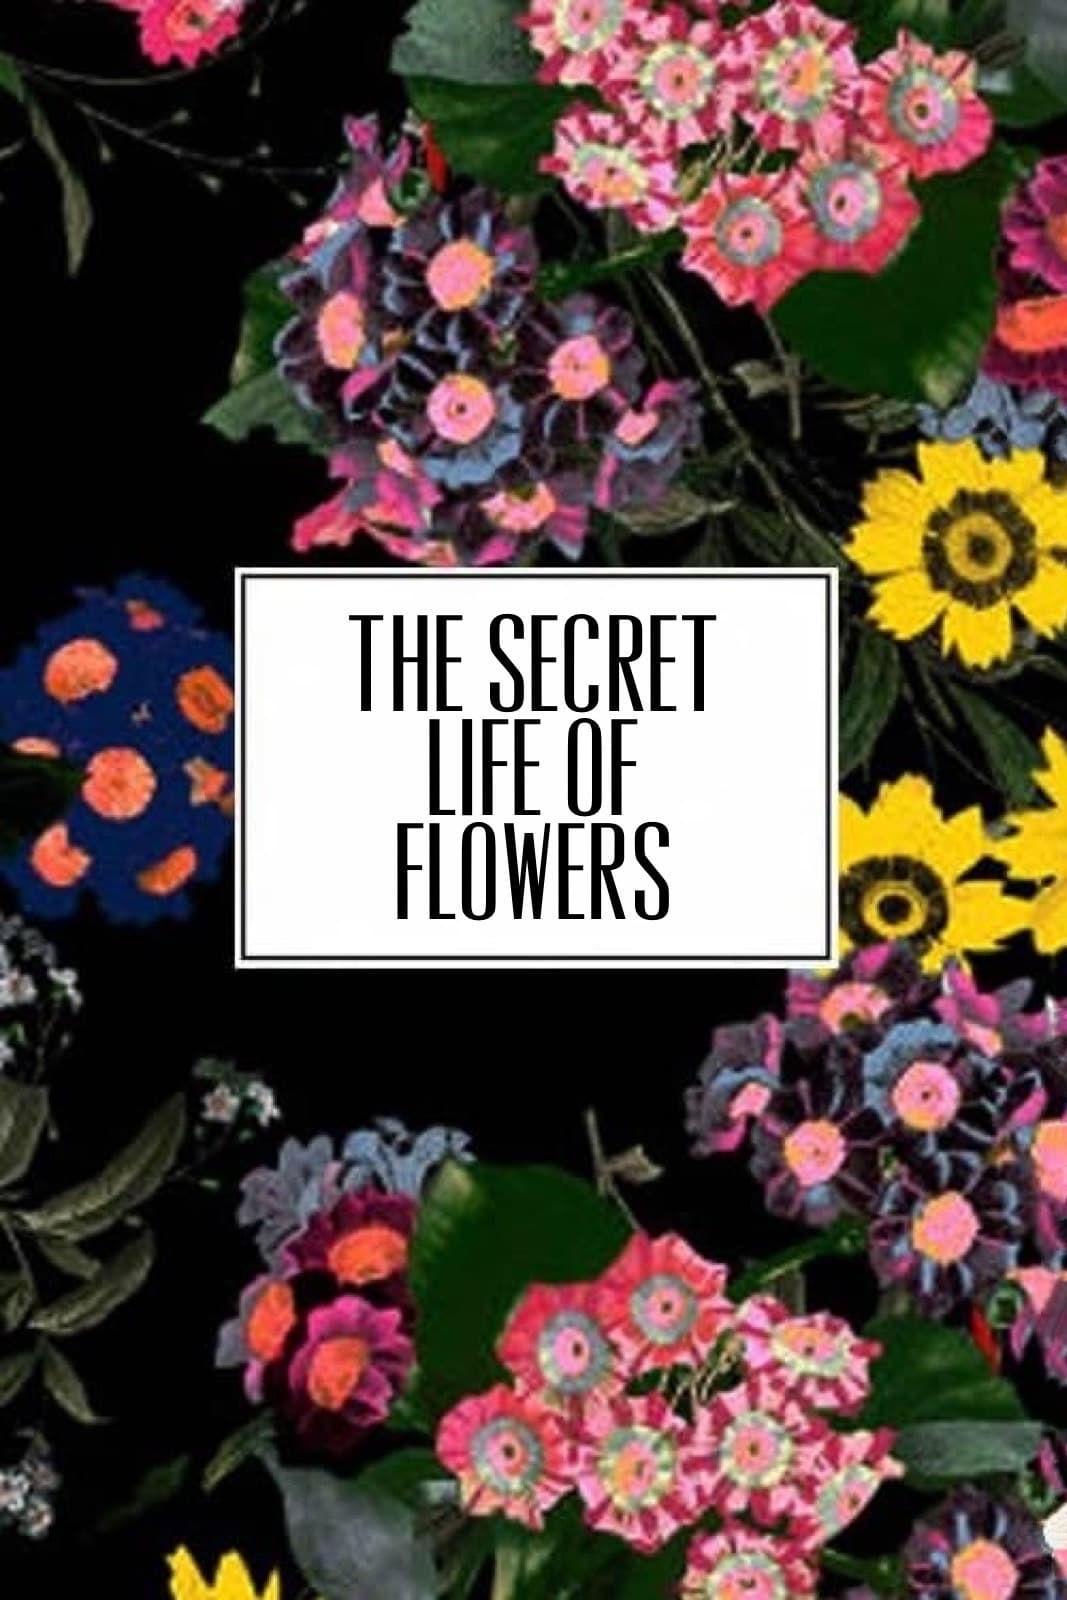 The Secret Life of Flowers film